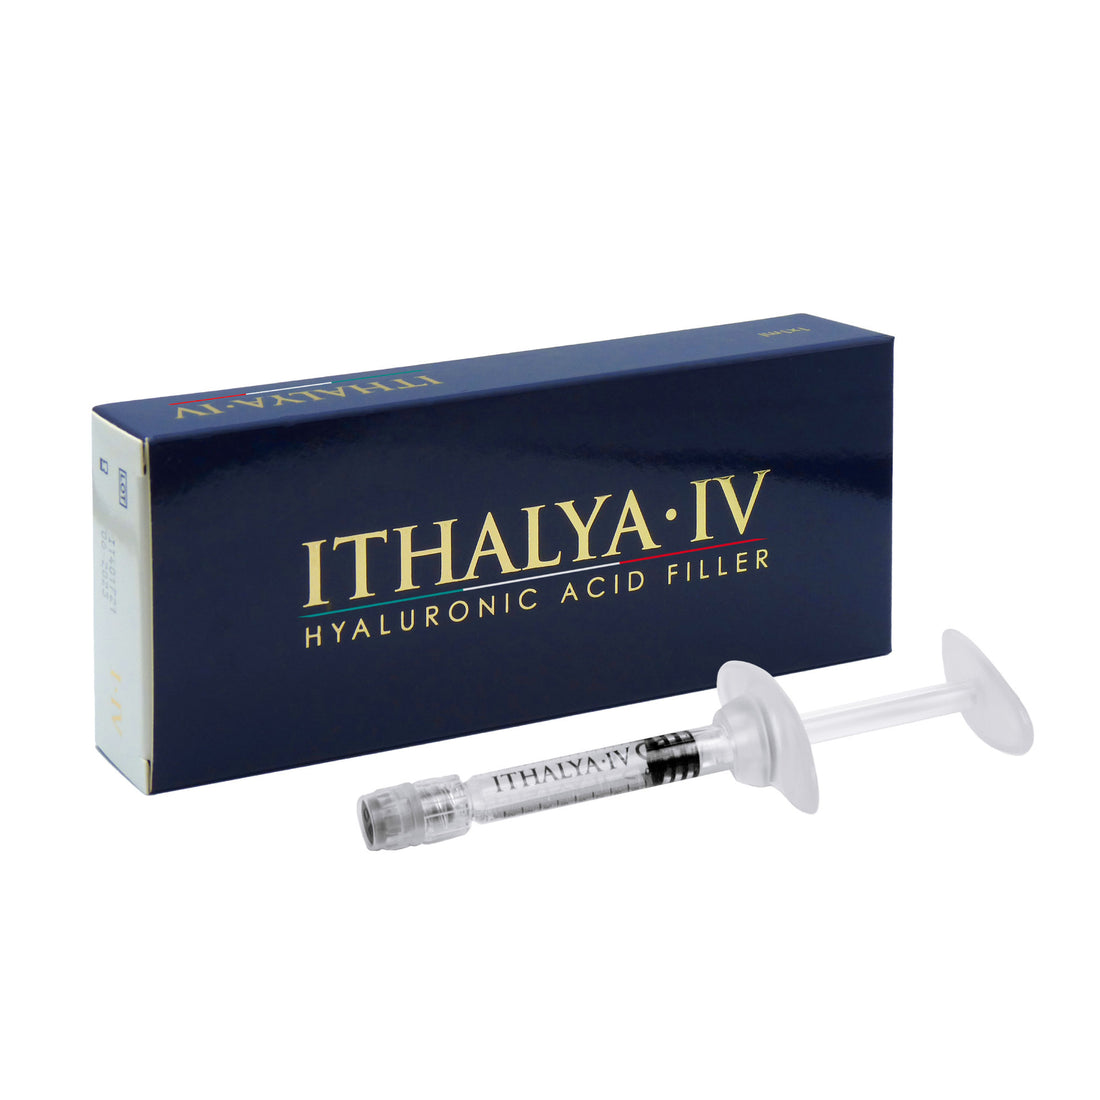 ITHALYA IV - Cross-linked Hyaluronic Acid Filler - MONOPHASIC CROSSLINKED